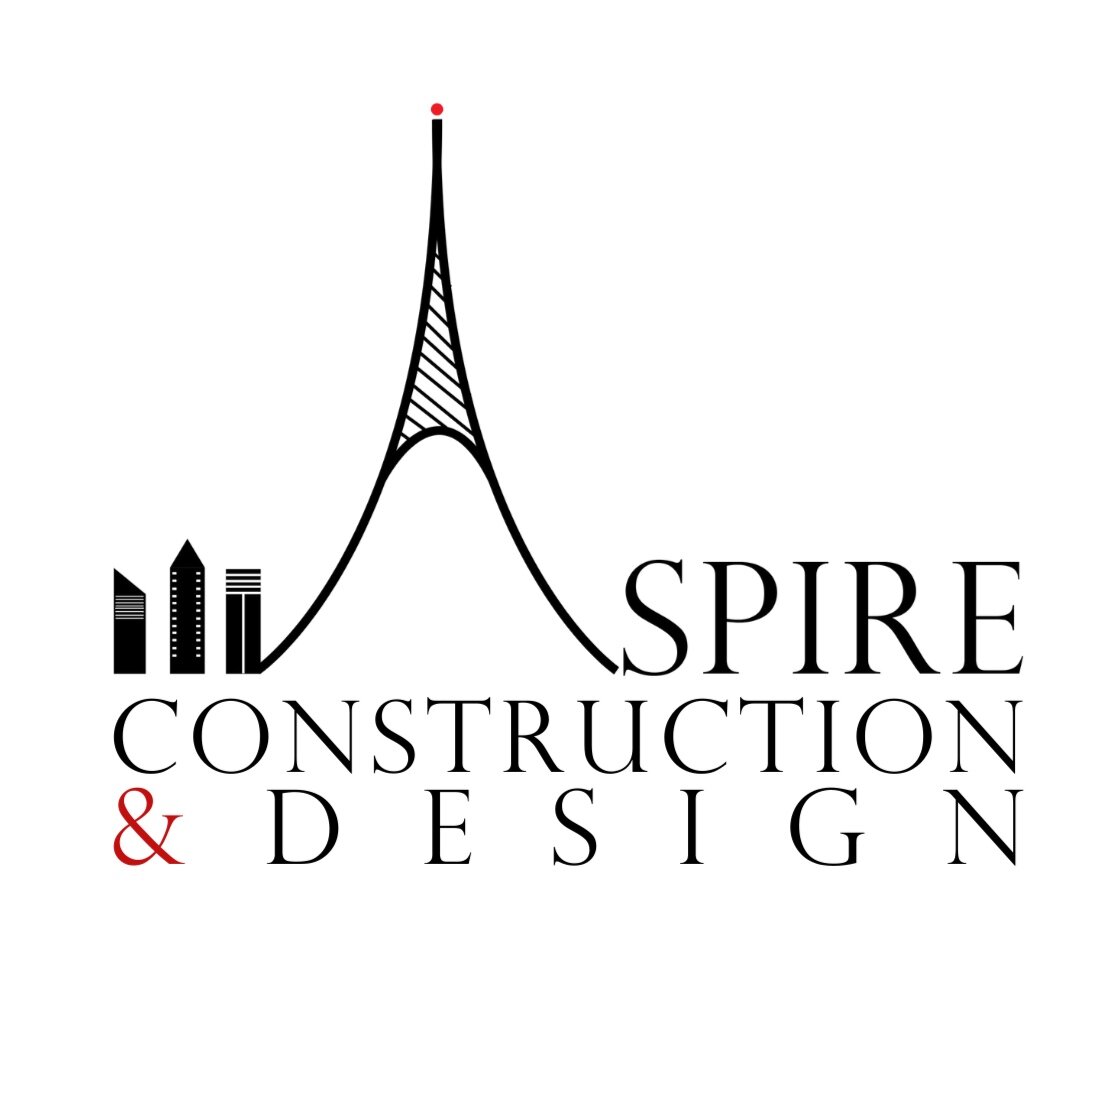 Aspire Construction &amp; Design (Copy) (Copy)